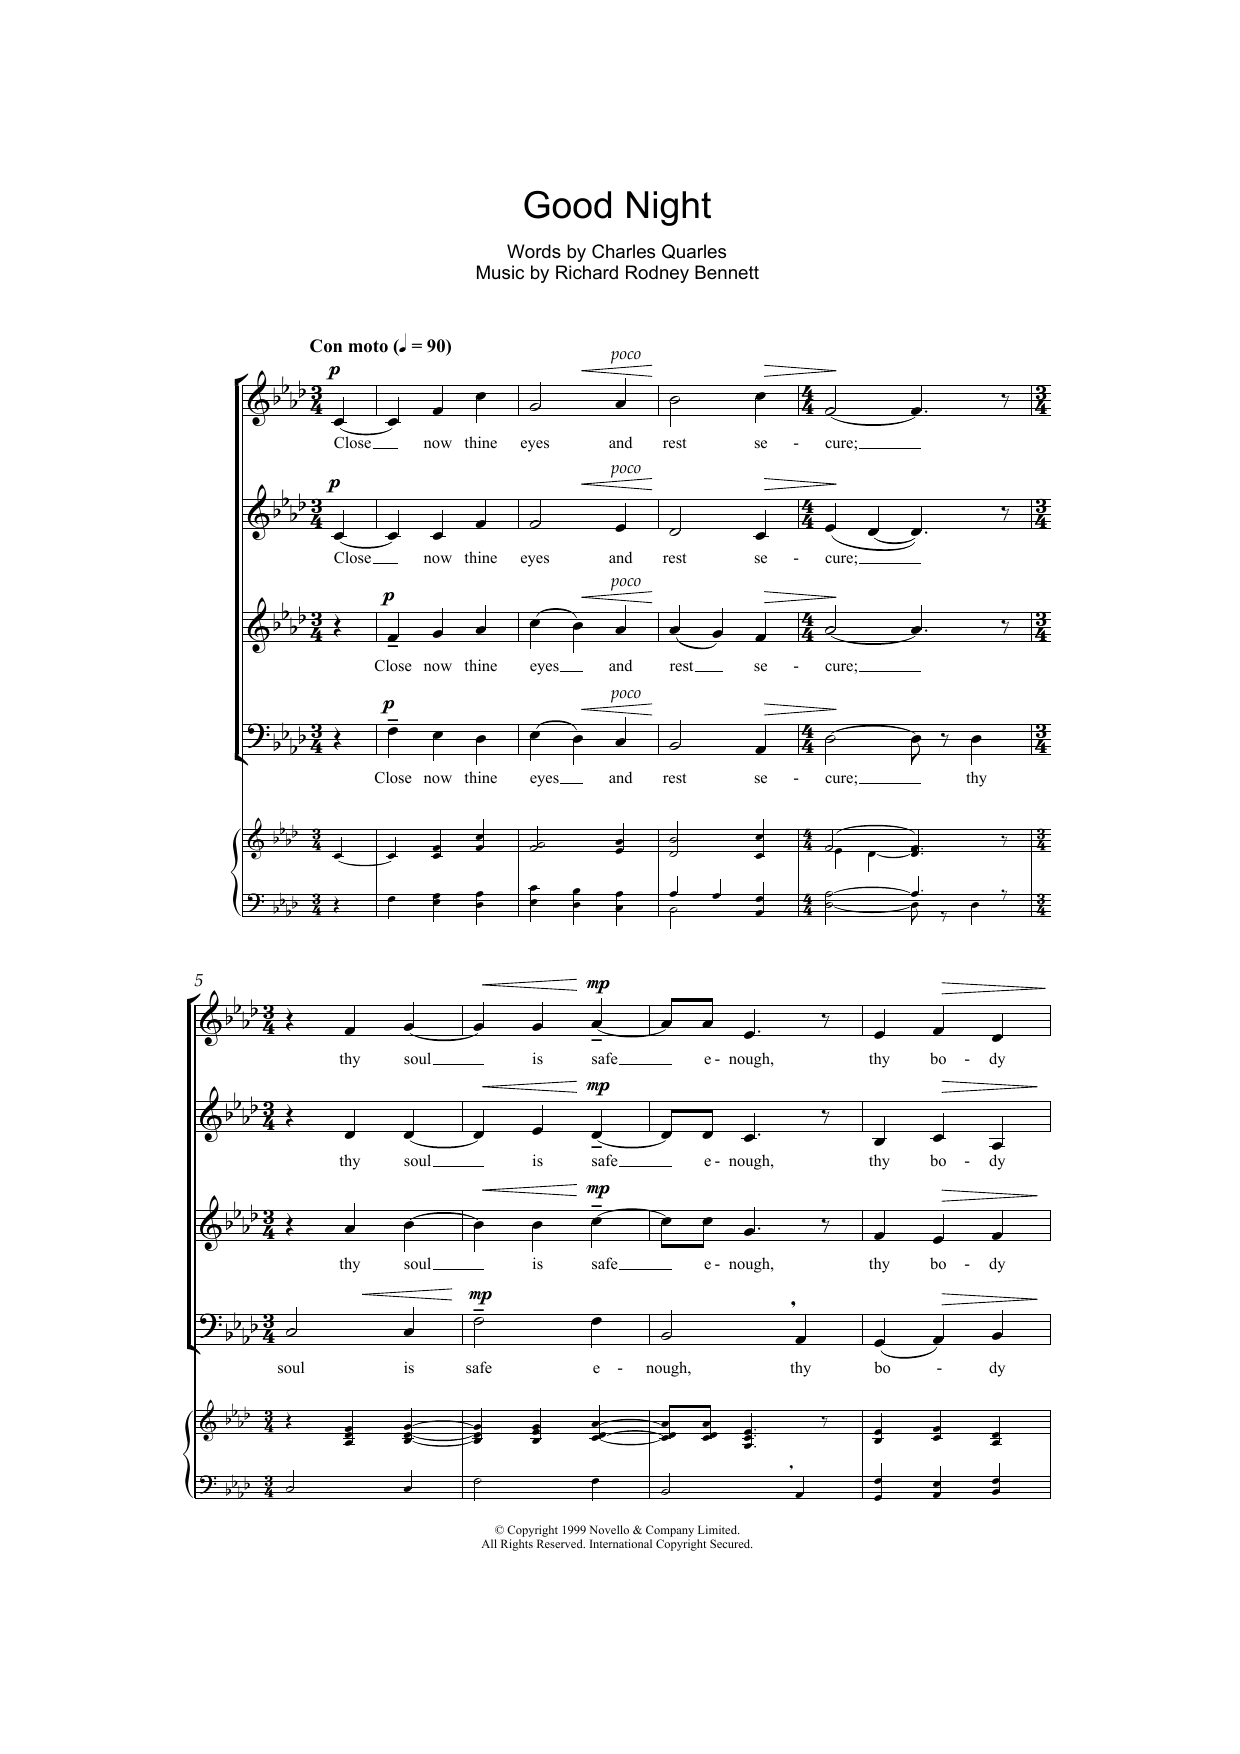 Richard Rodney Bennett Good Night Sheet Music Notes & Chords for SATB Choir - Download or Print PDF